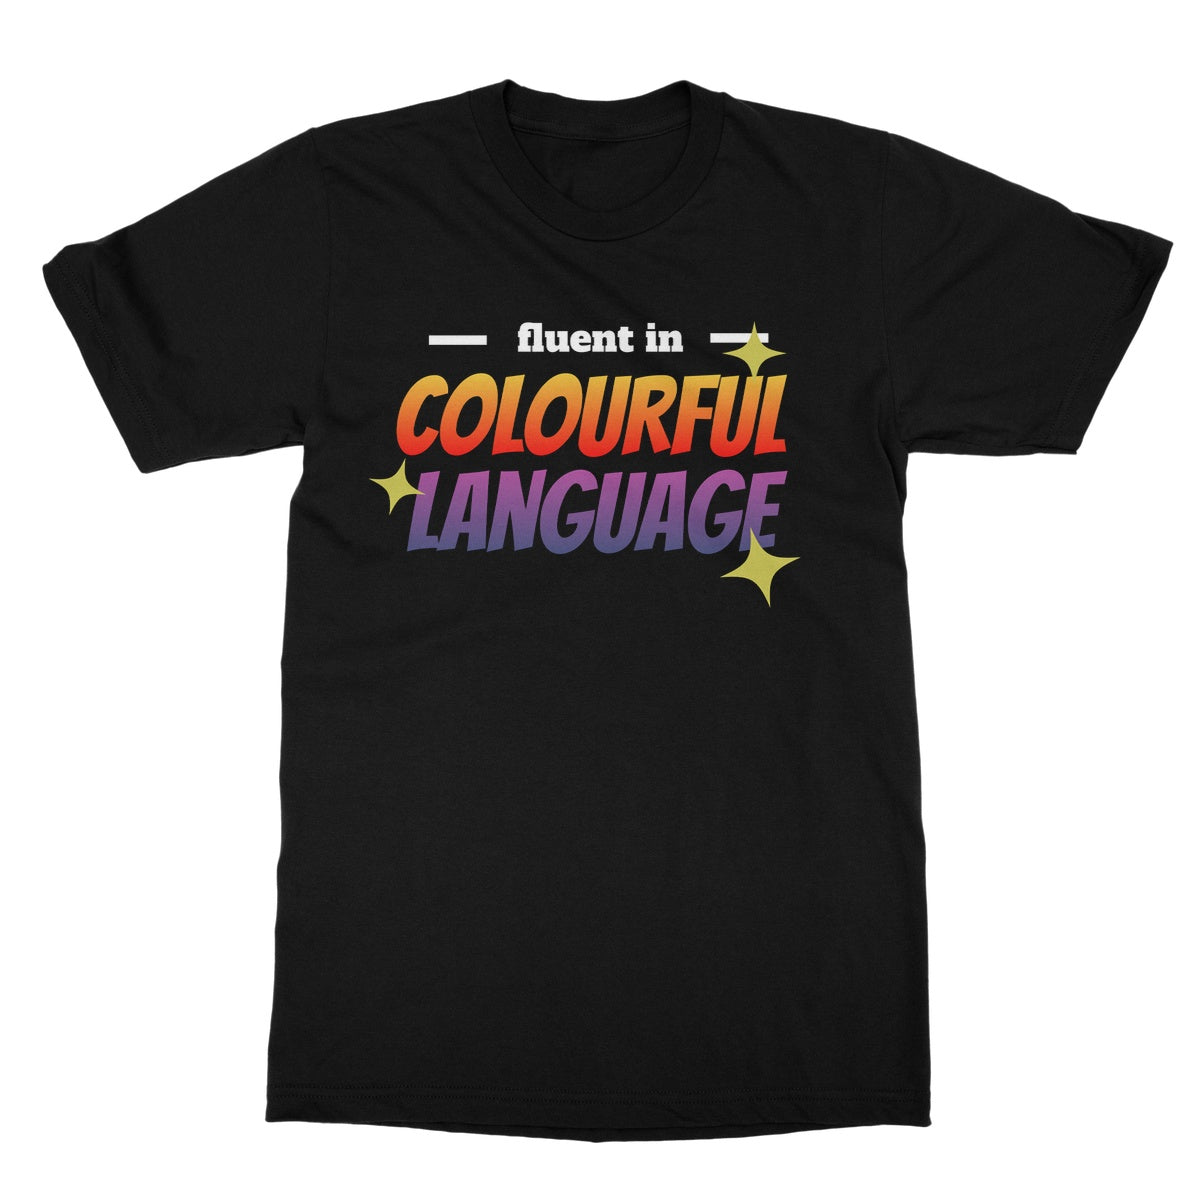 fluent in colourful language t shirt black